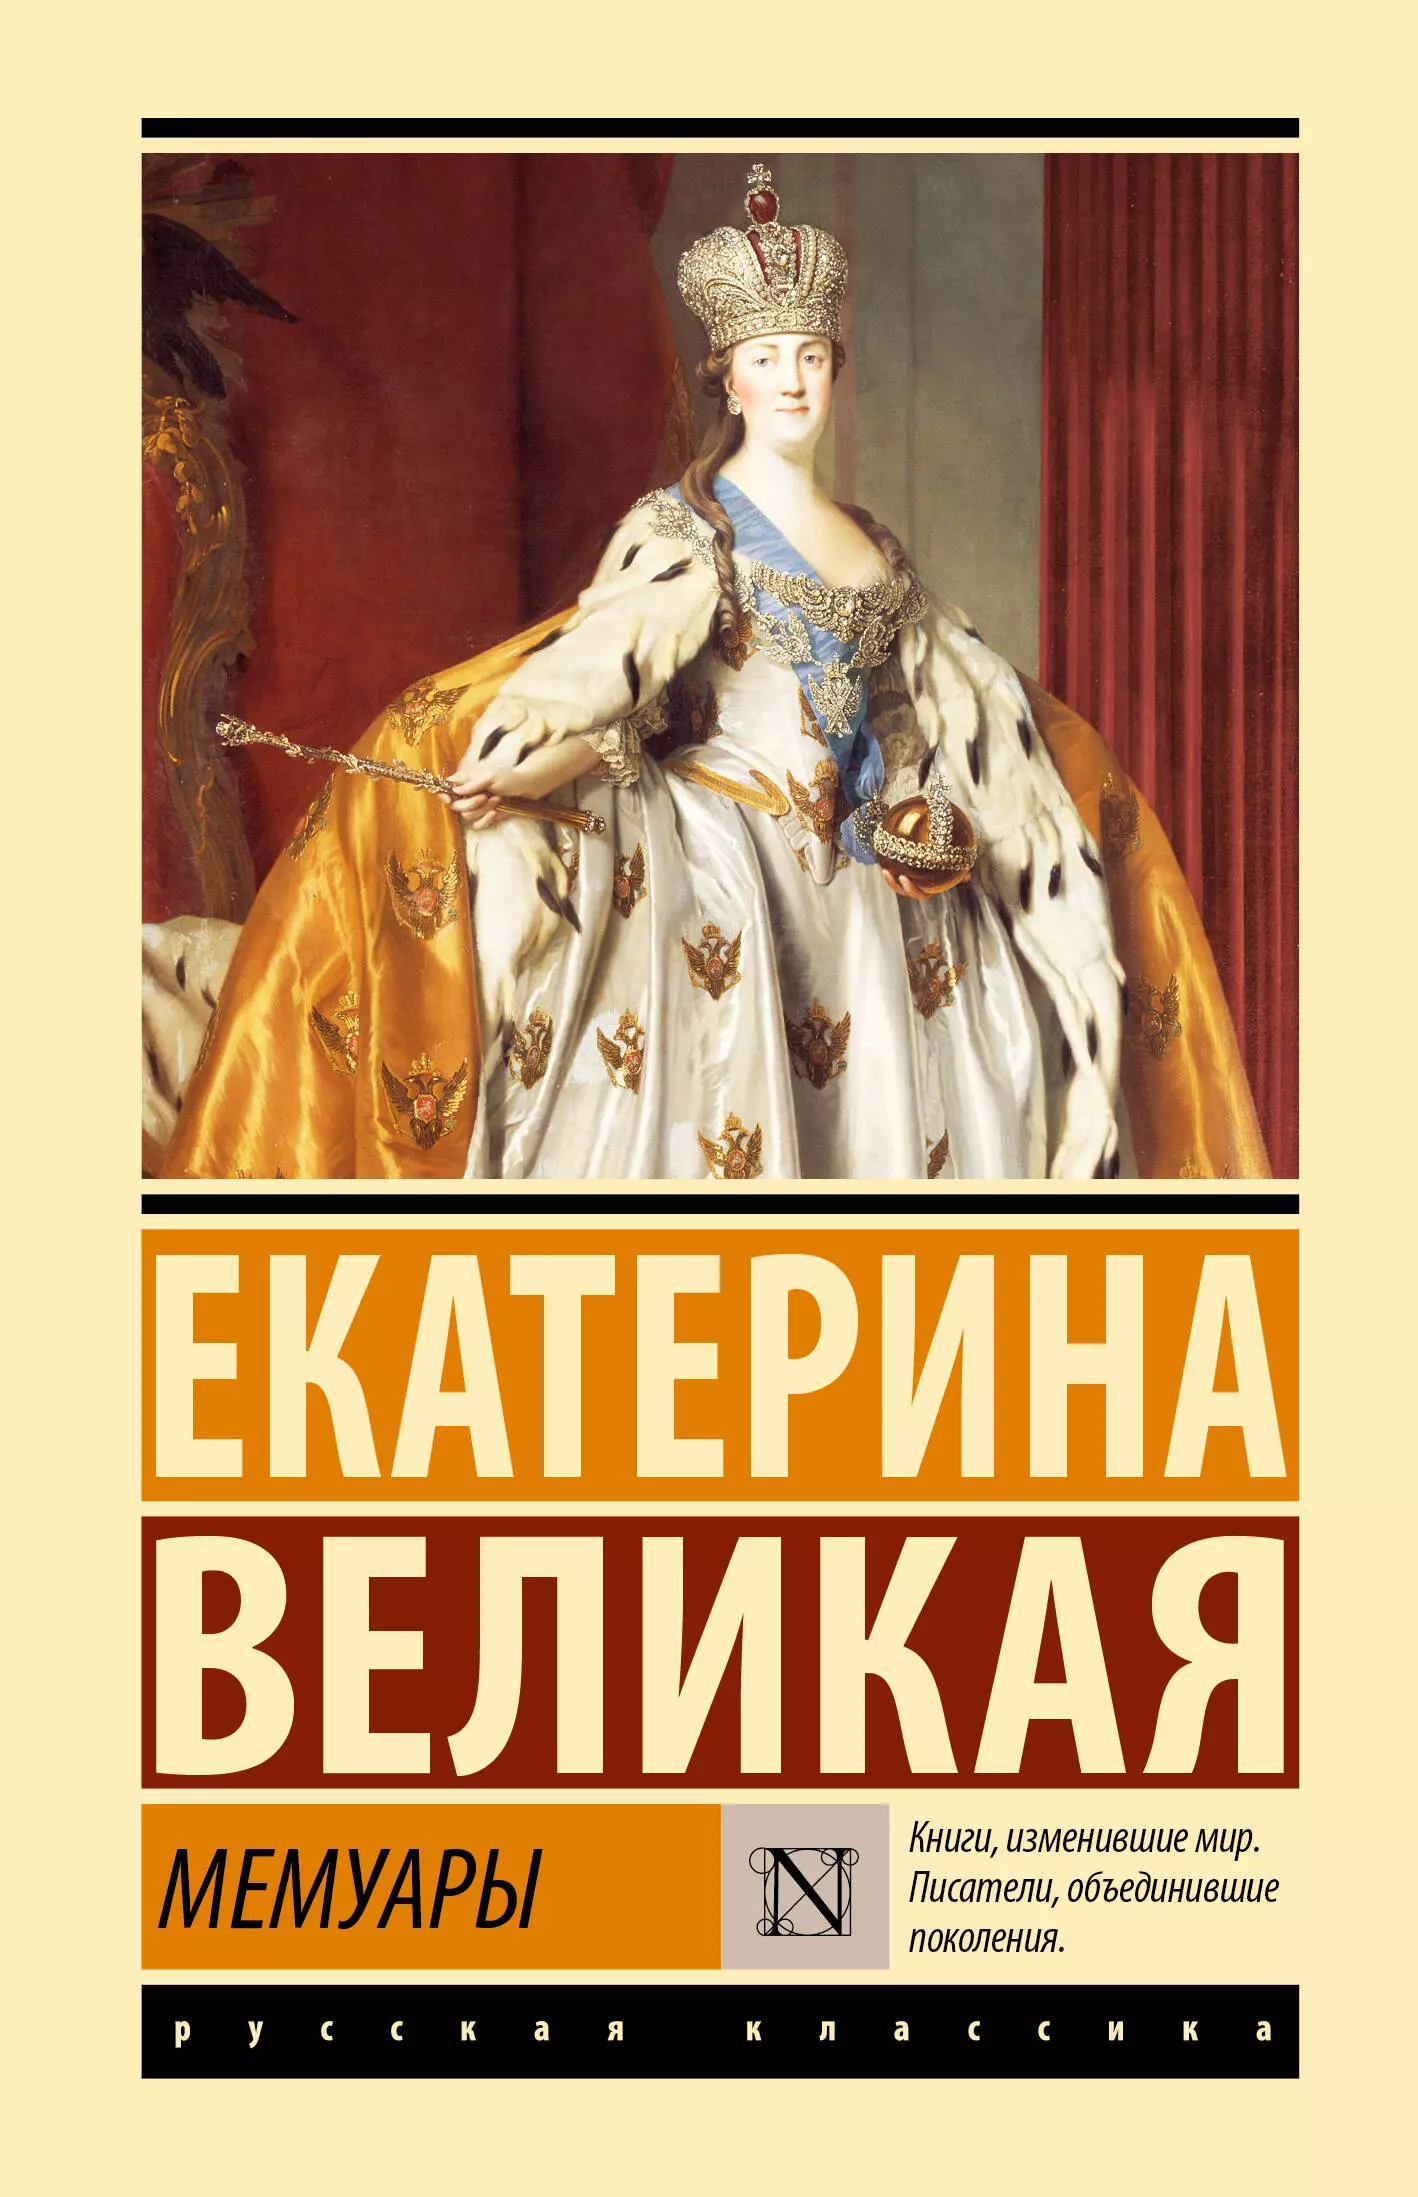 Екатерина II (Императрица) Мемуары